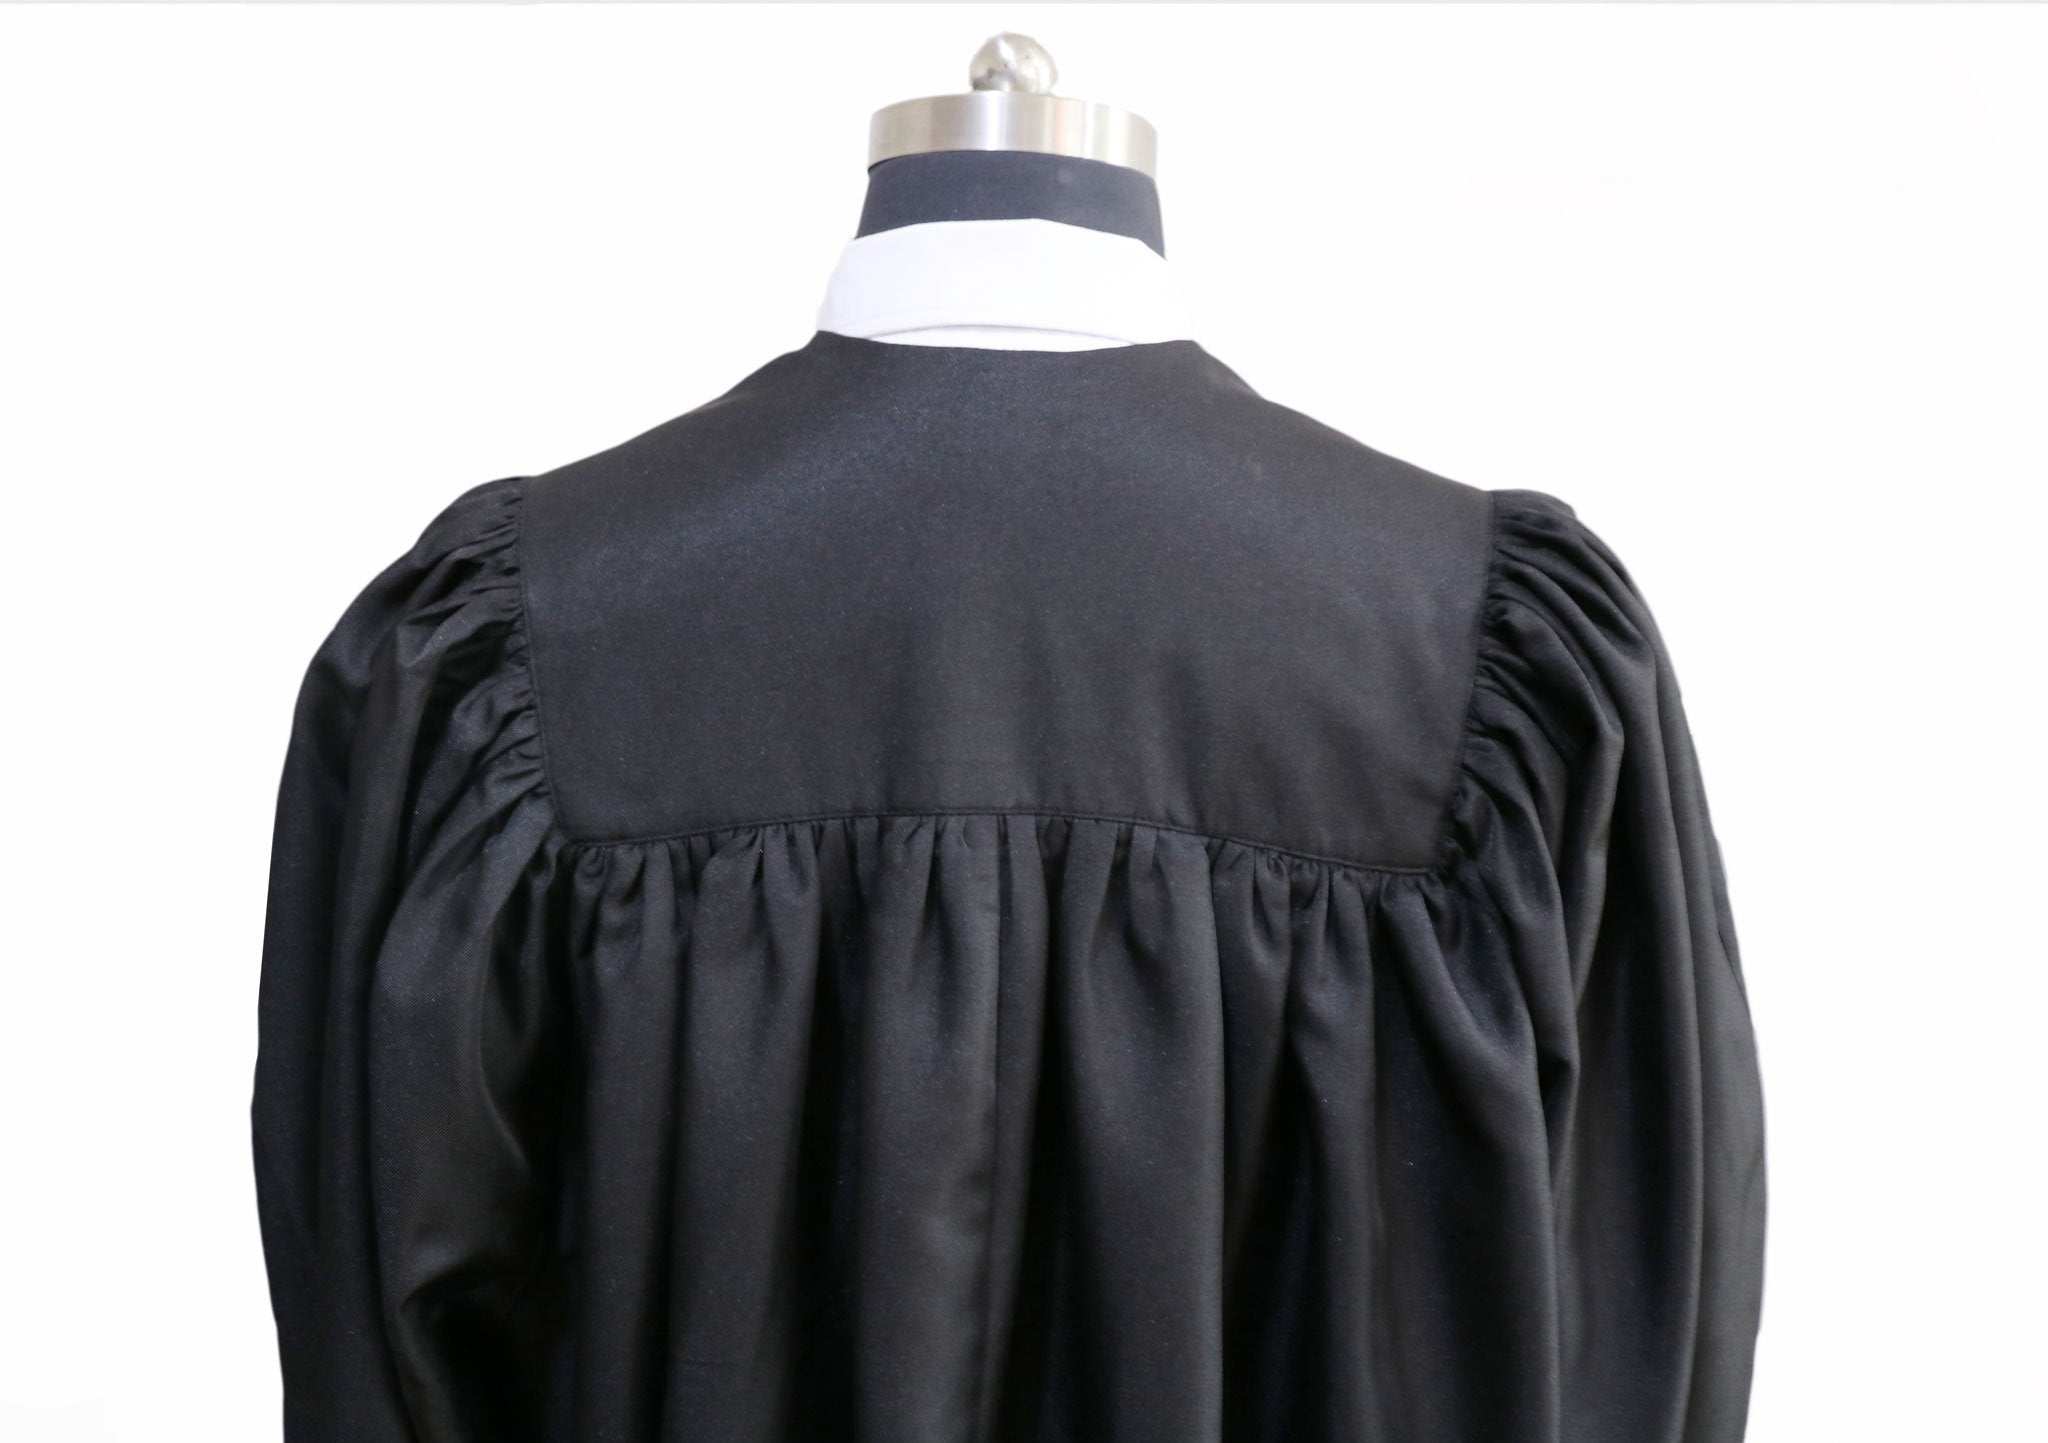 Classic Black Masters Graduation Gown - Graduation Gowns UK